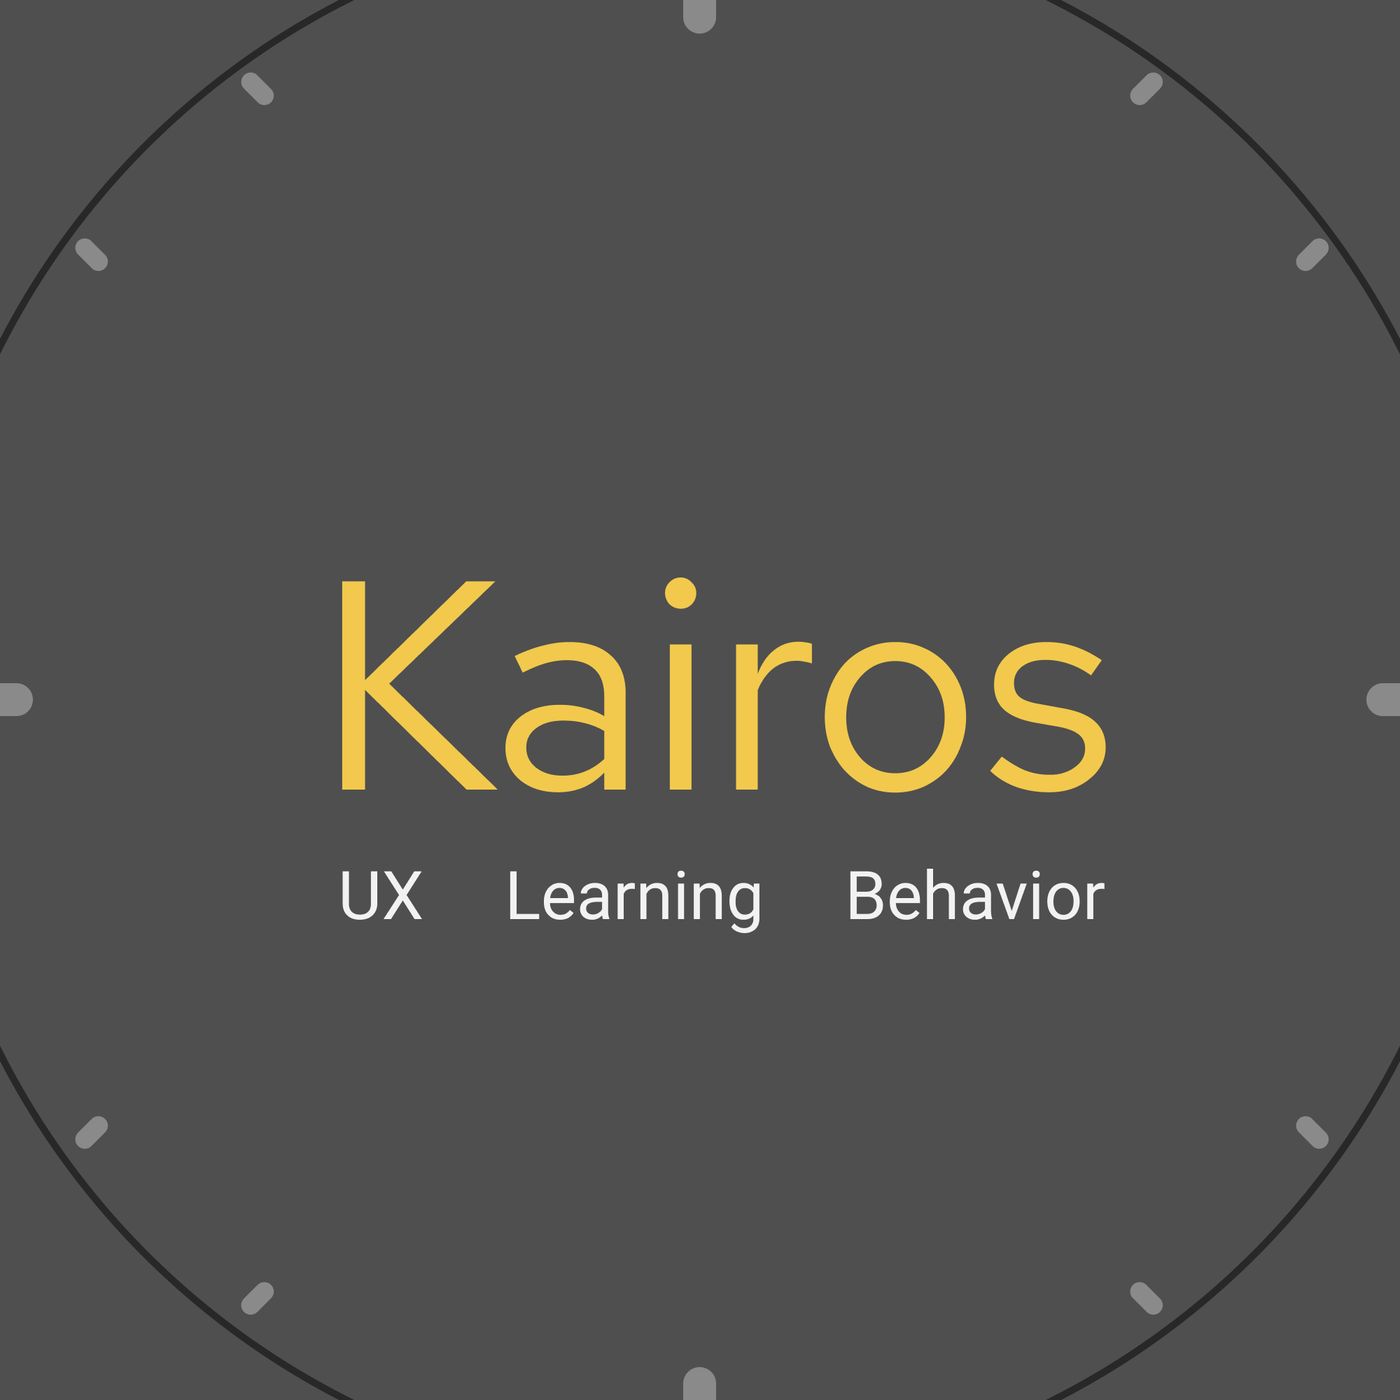 Kairos - UX, learning and behavior